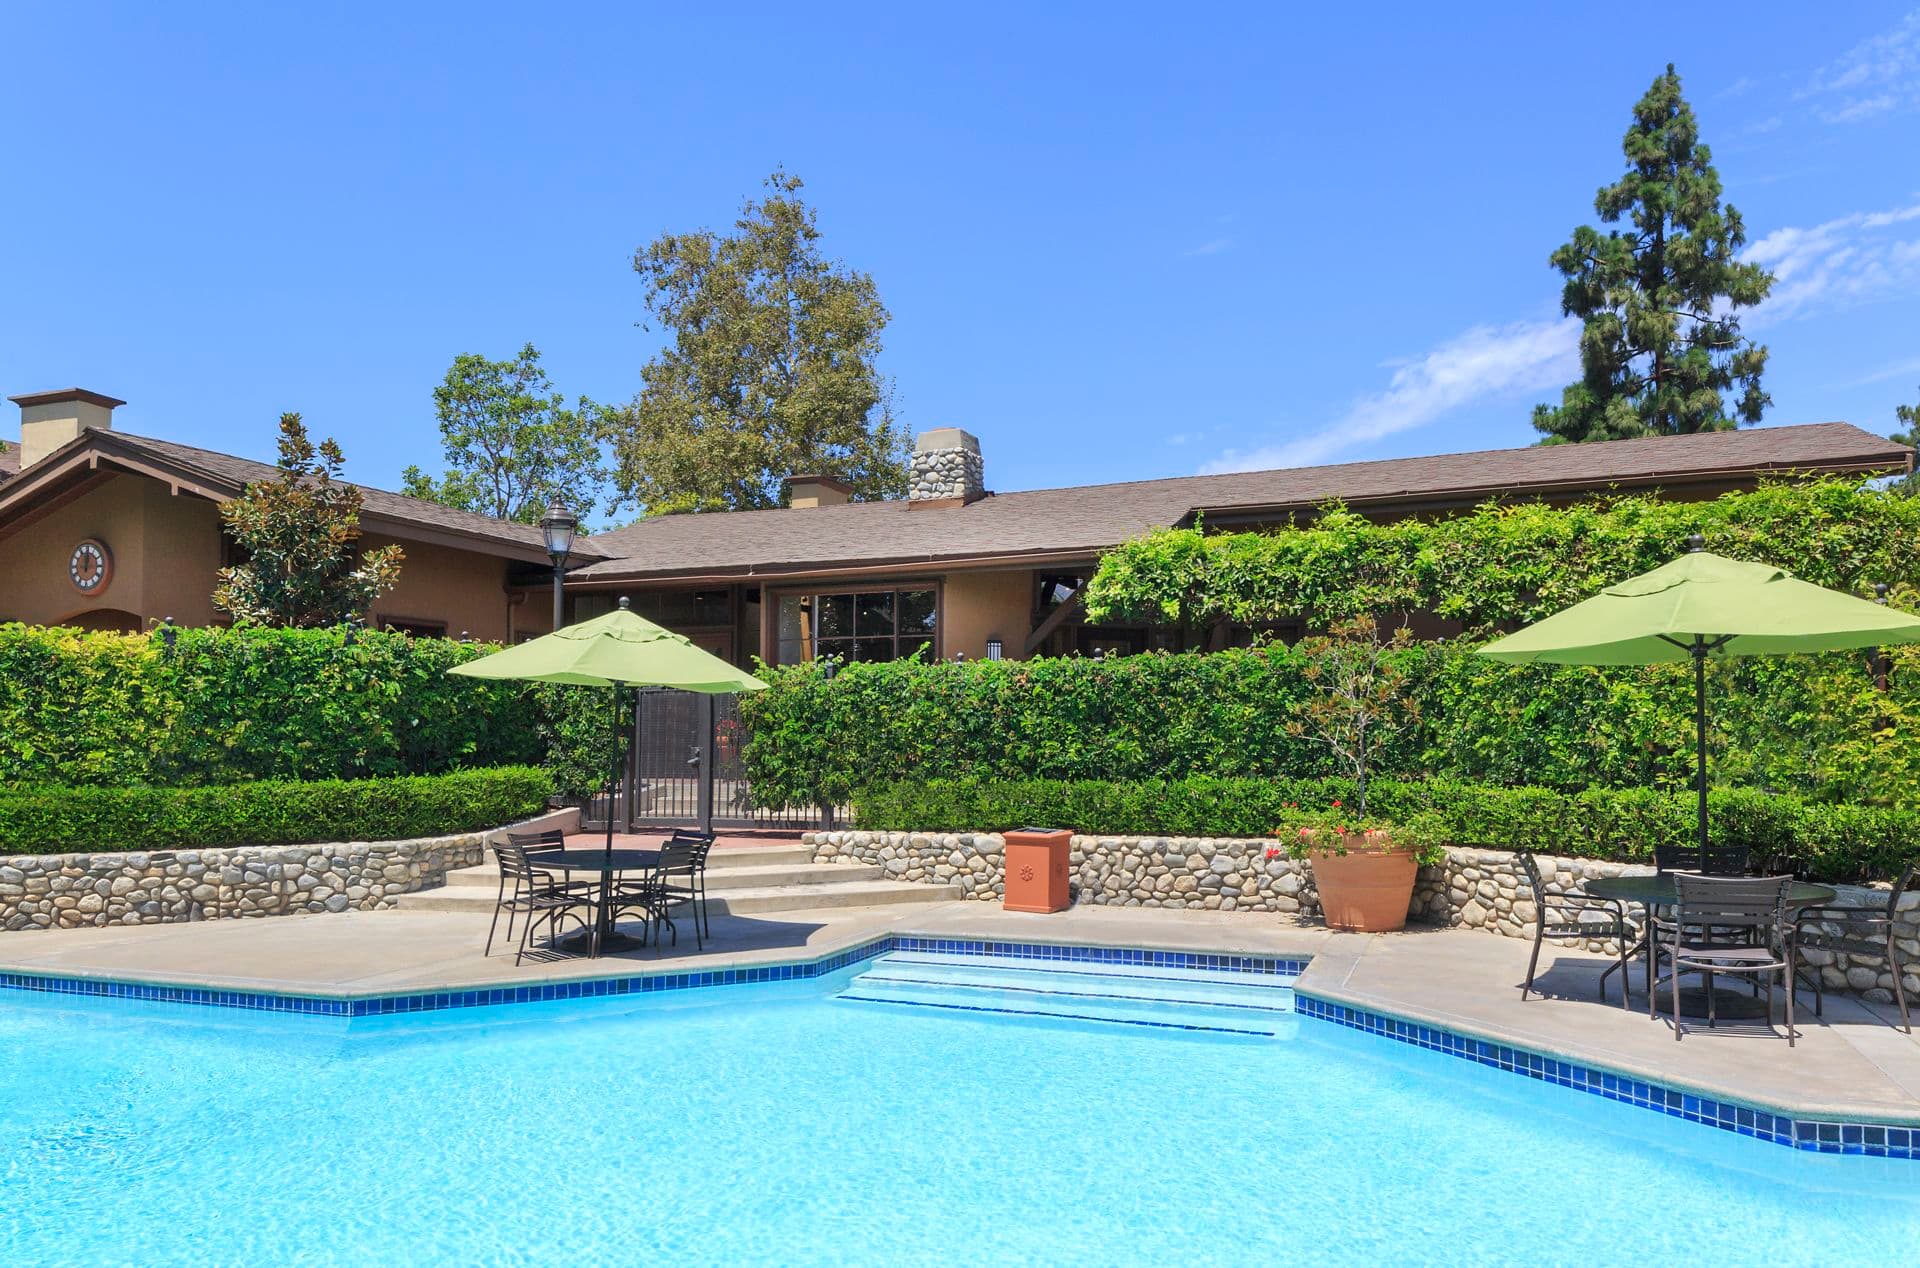 Pool view of Woodbridge Pines Apartment Homes in Irvine, CA.